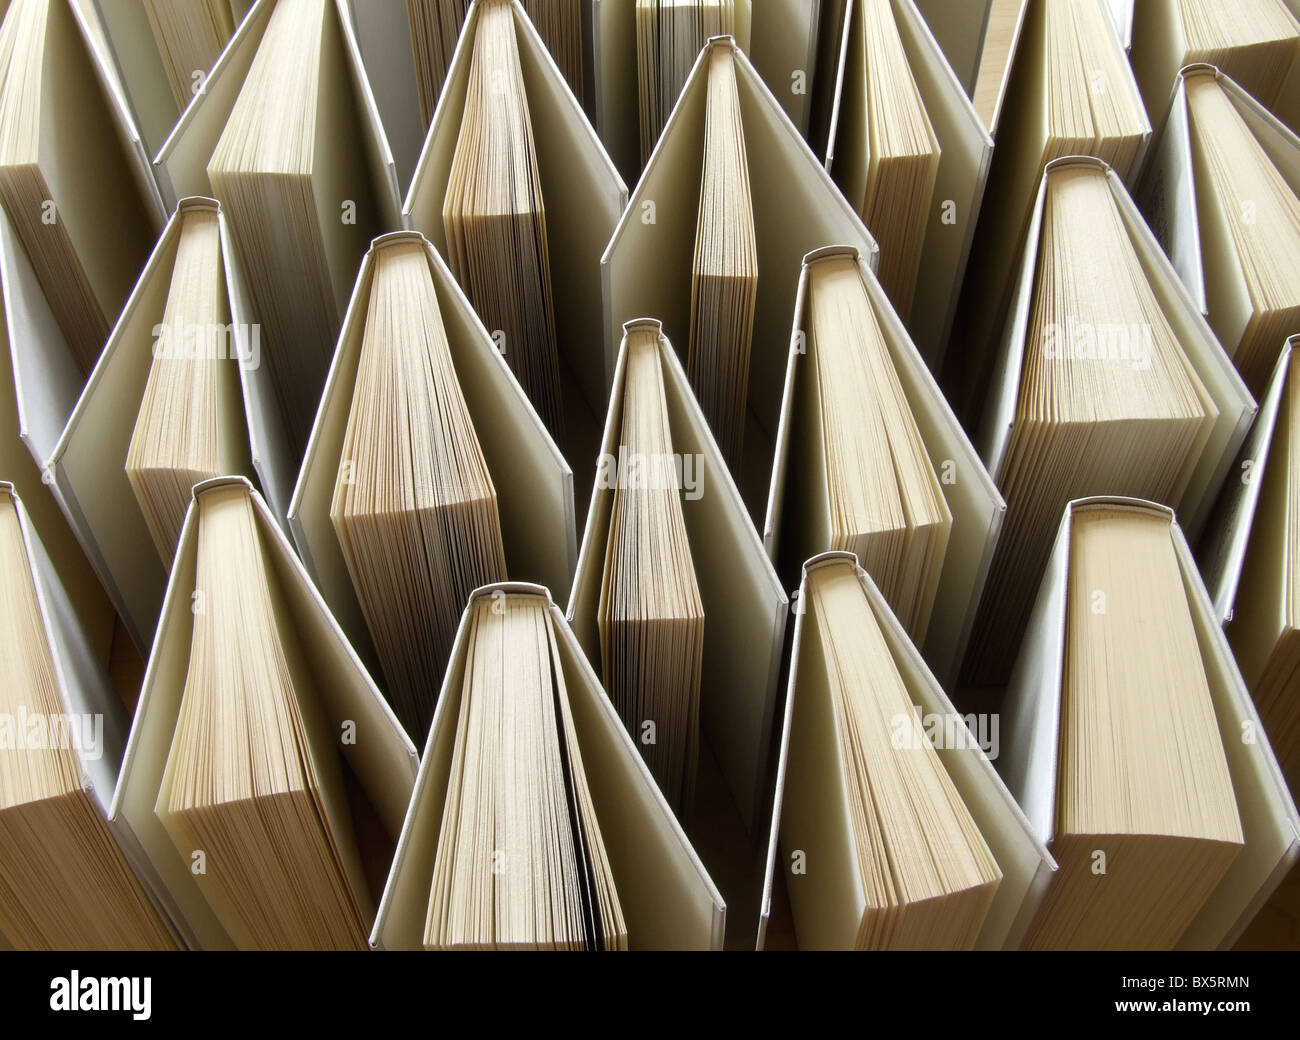 Bücher / books Stock Photo